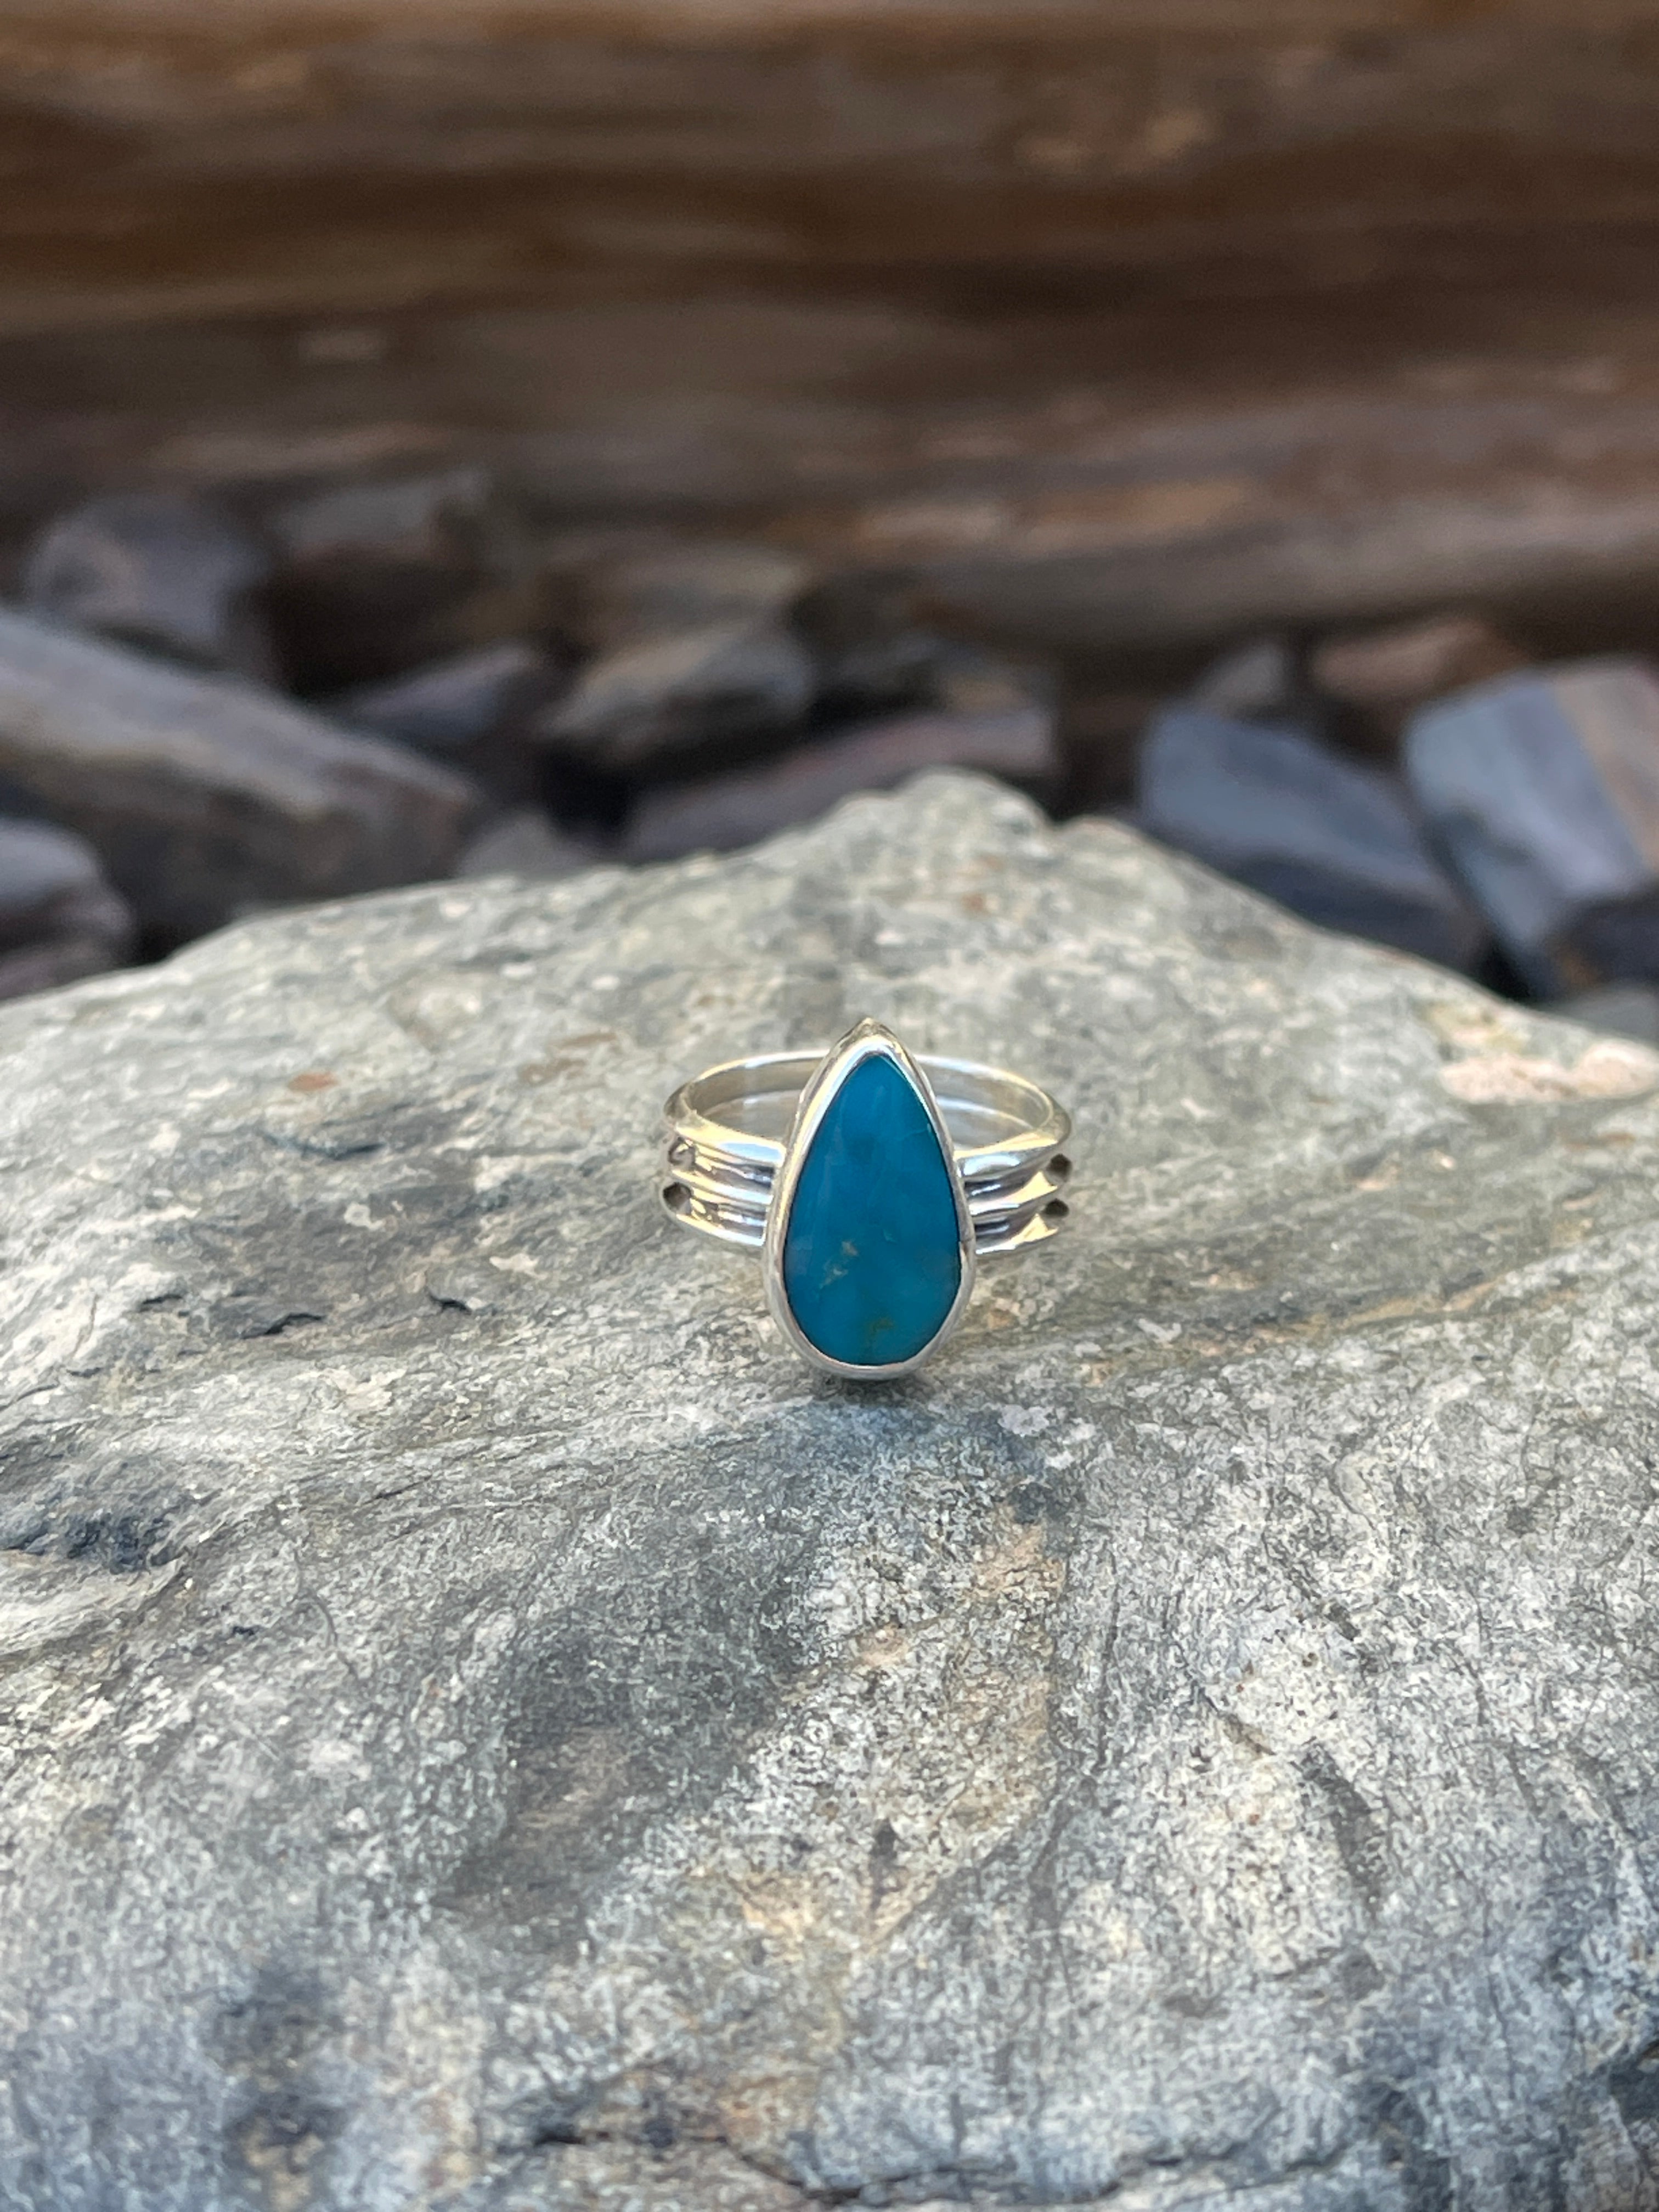 Handmade Solid Sterling Silver Tear Drop Kingman Turquoise Plain Bezel Ring - Size 6